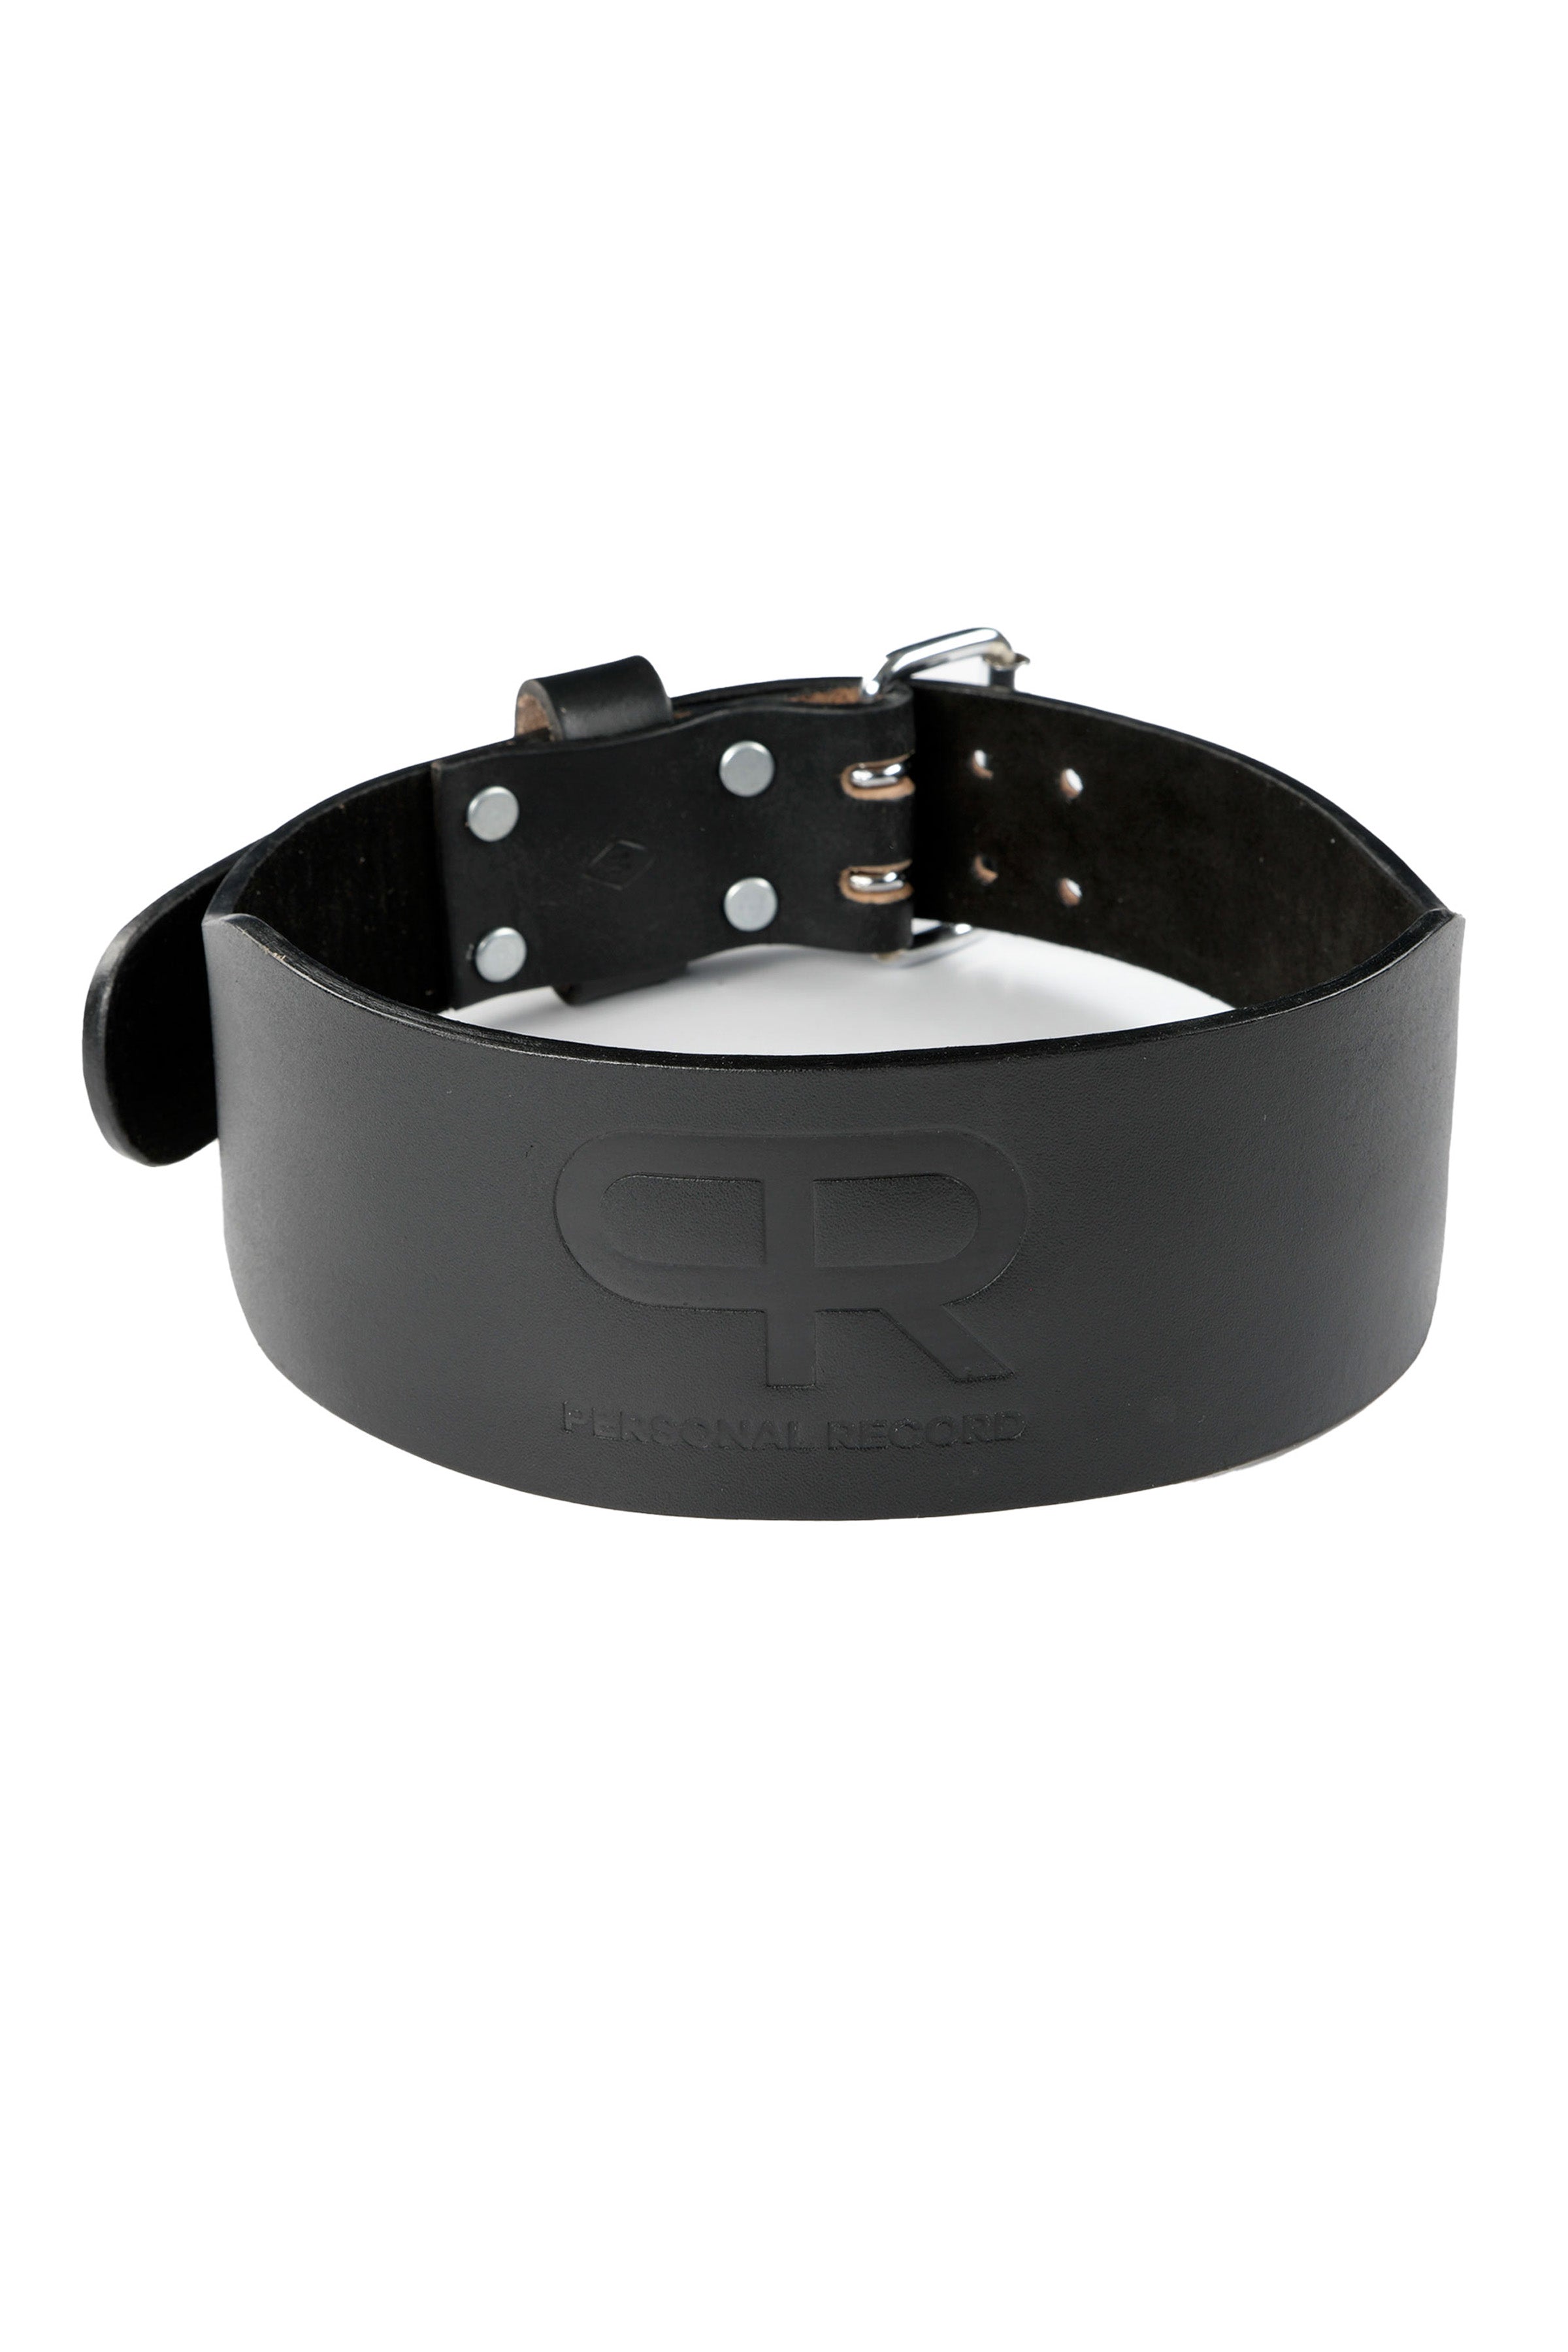 PR Weightlifting 4mm Leather Belt - PR915 - Black